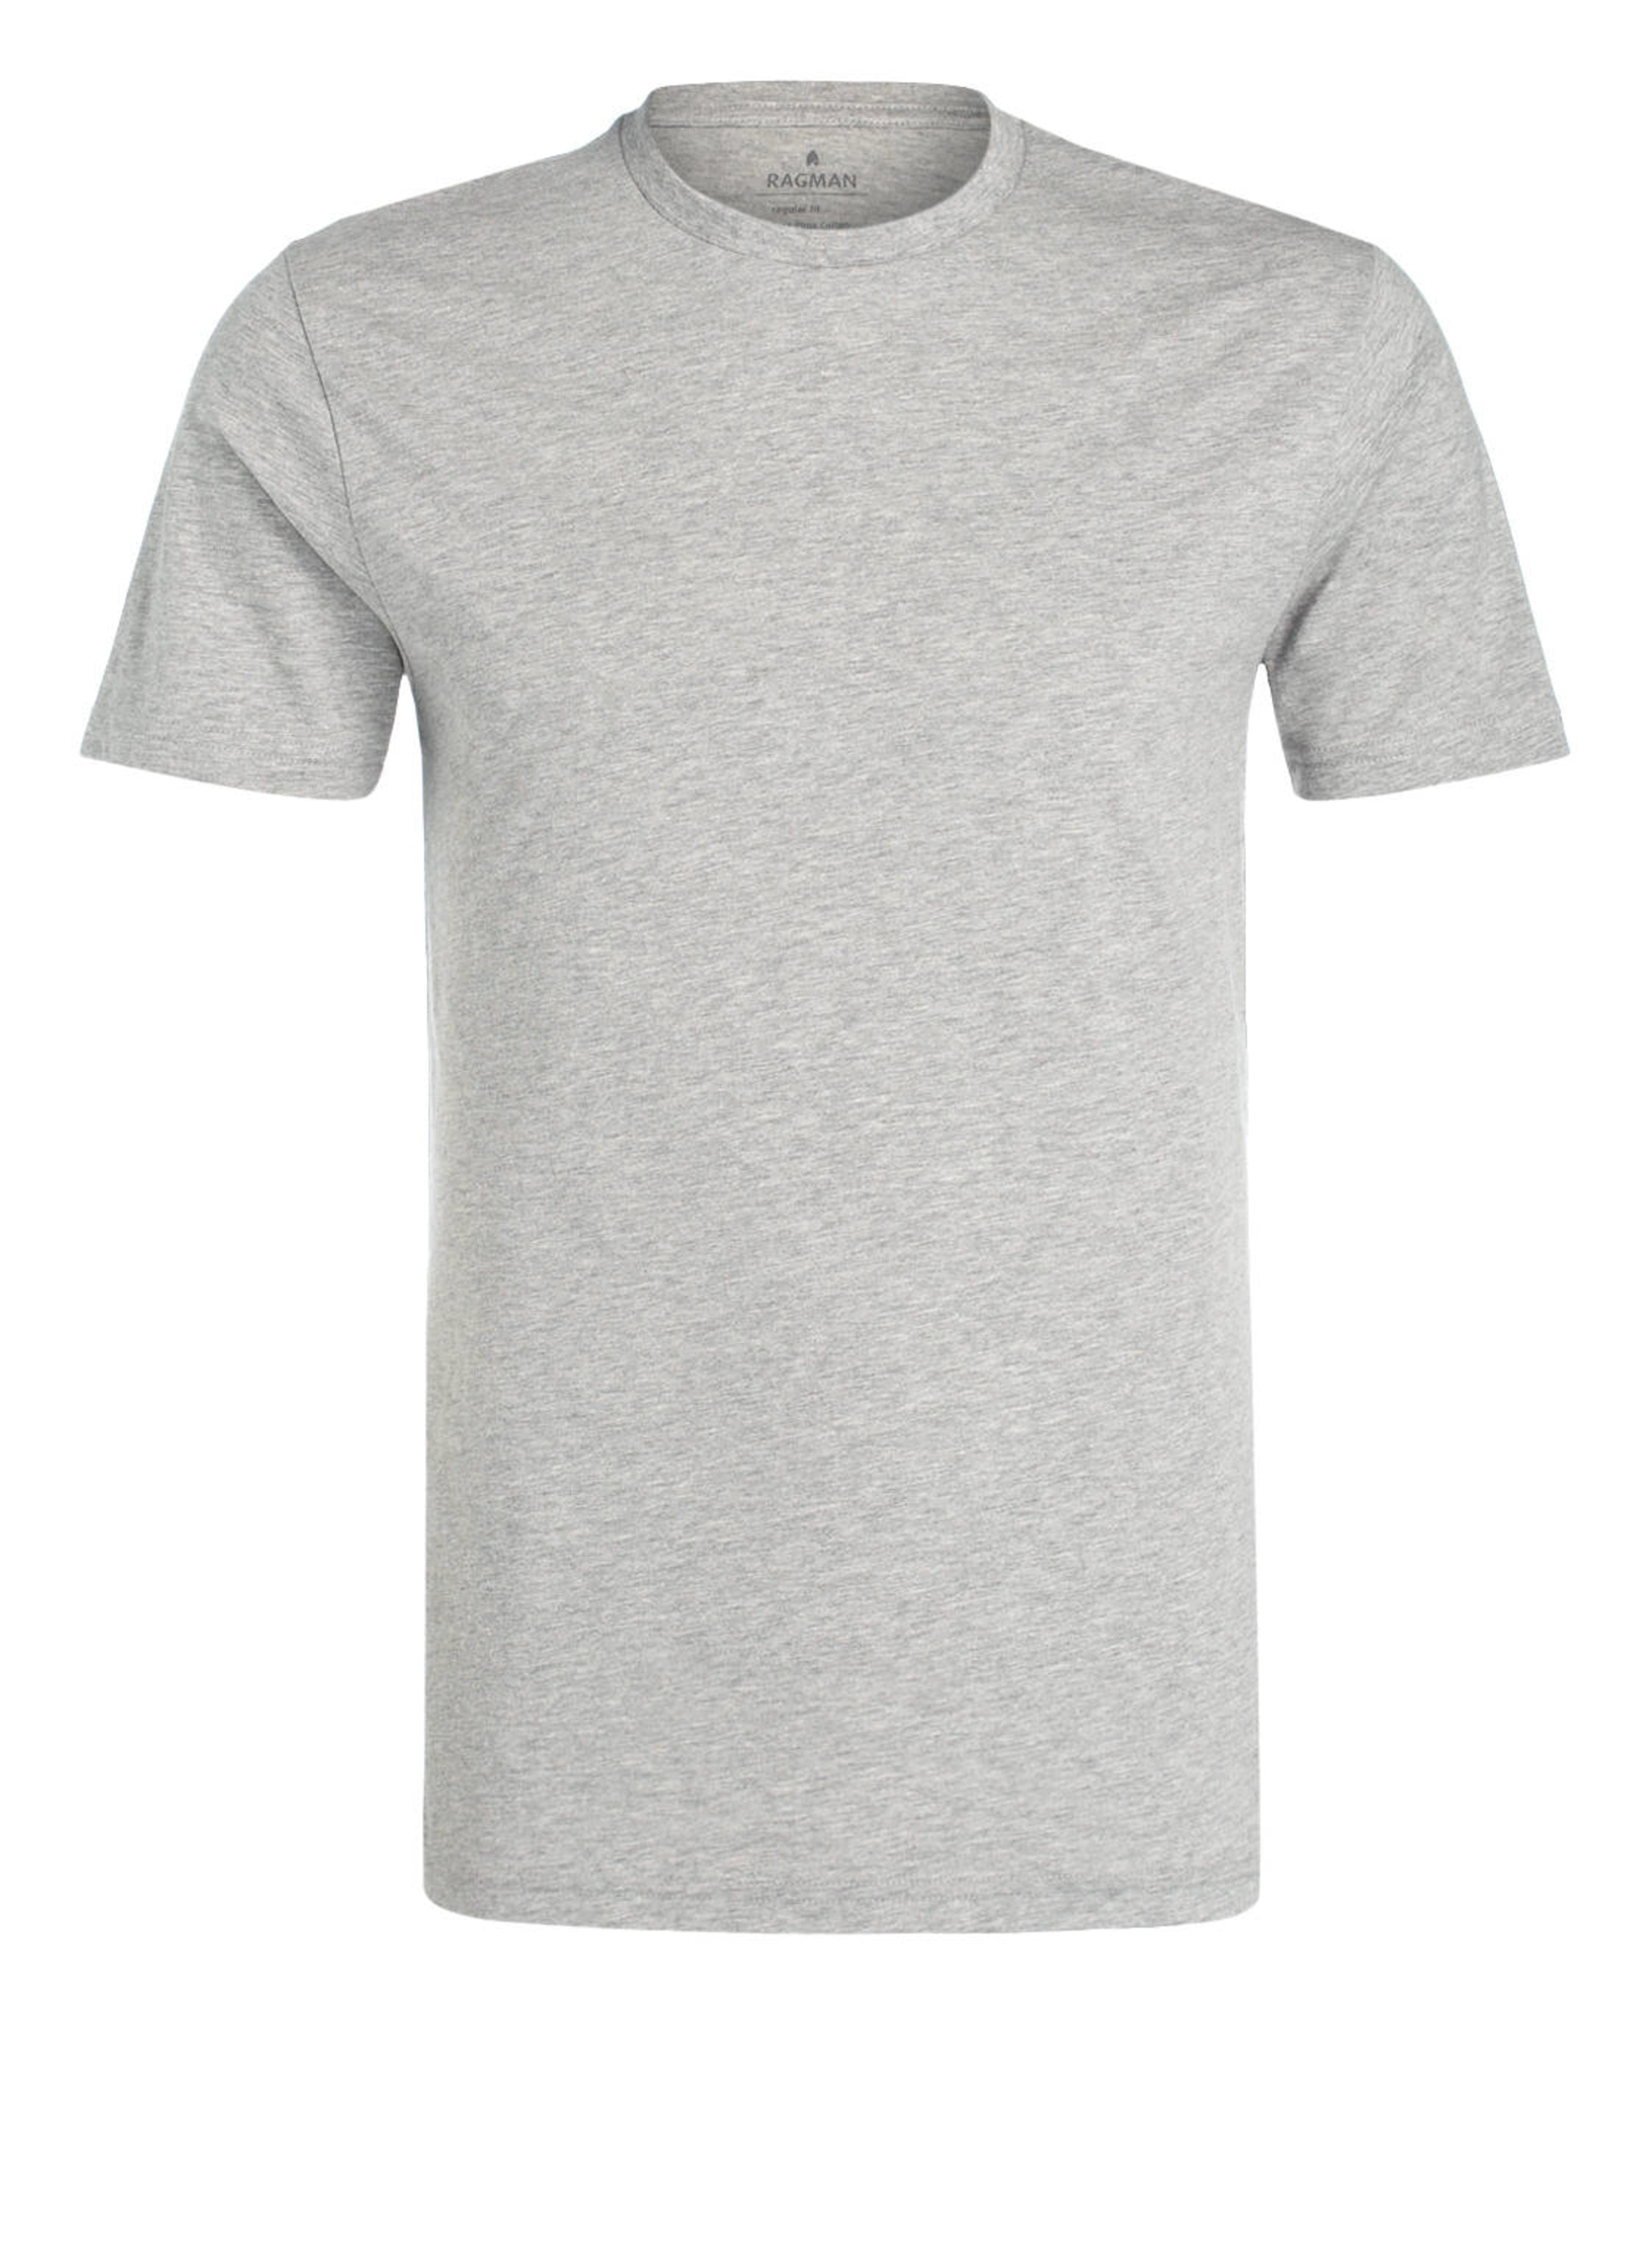 RAGMAN T-shirt regular fit mélange gray in